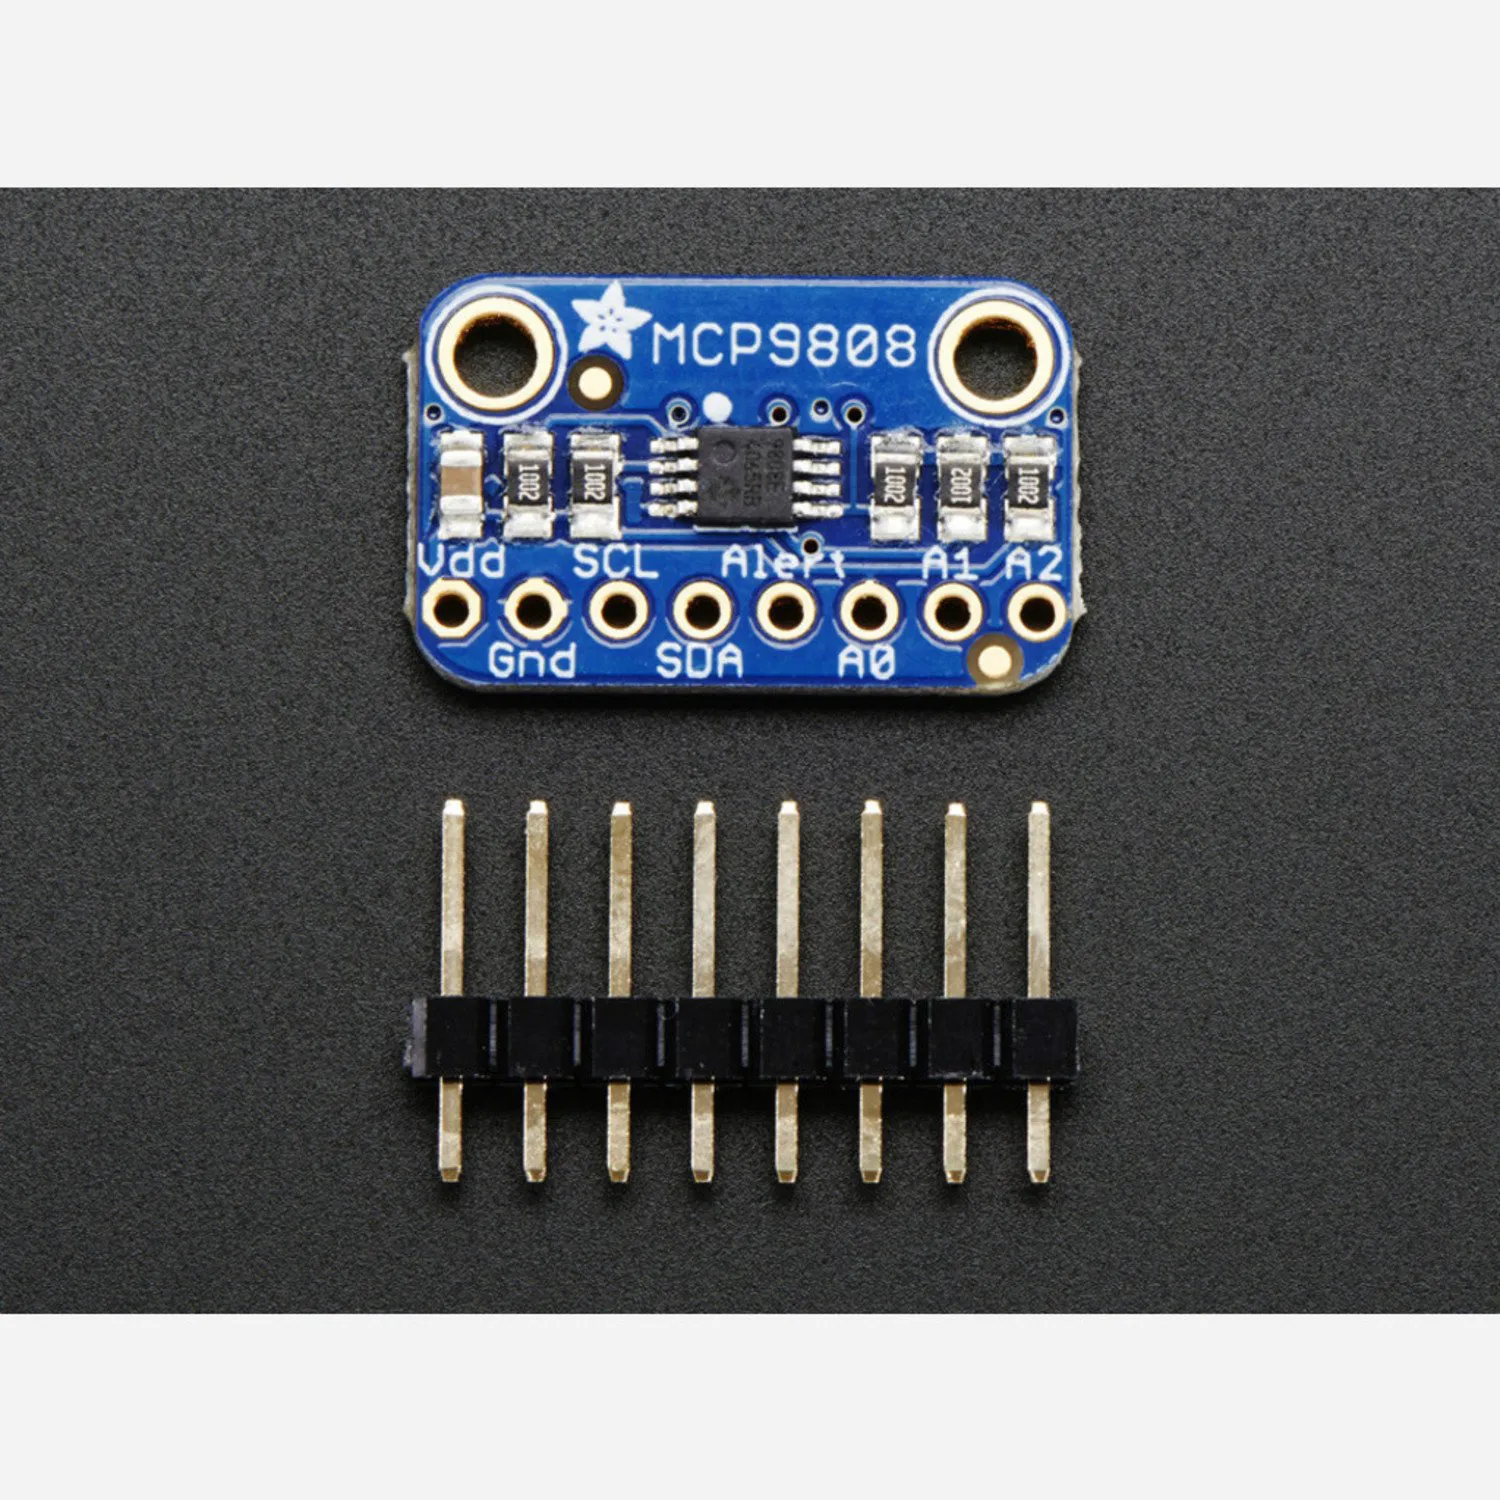 Photo of MCP9808 High Accuracy I2C Temperature Sensor Breakout Board